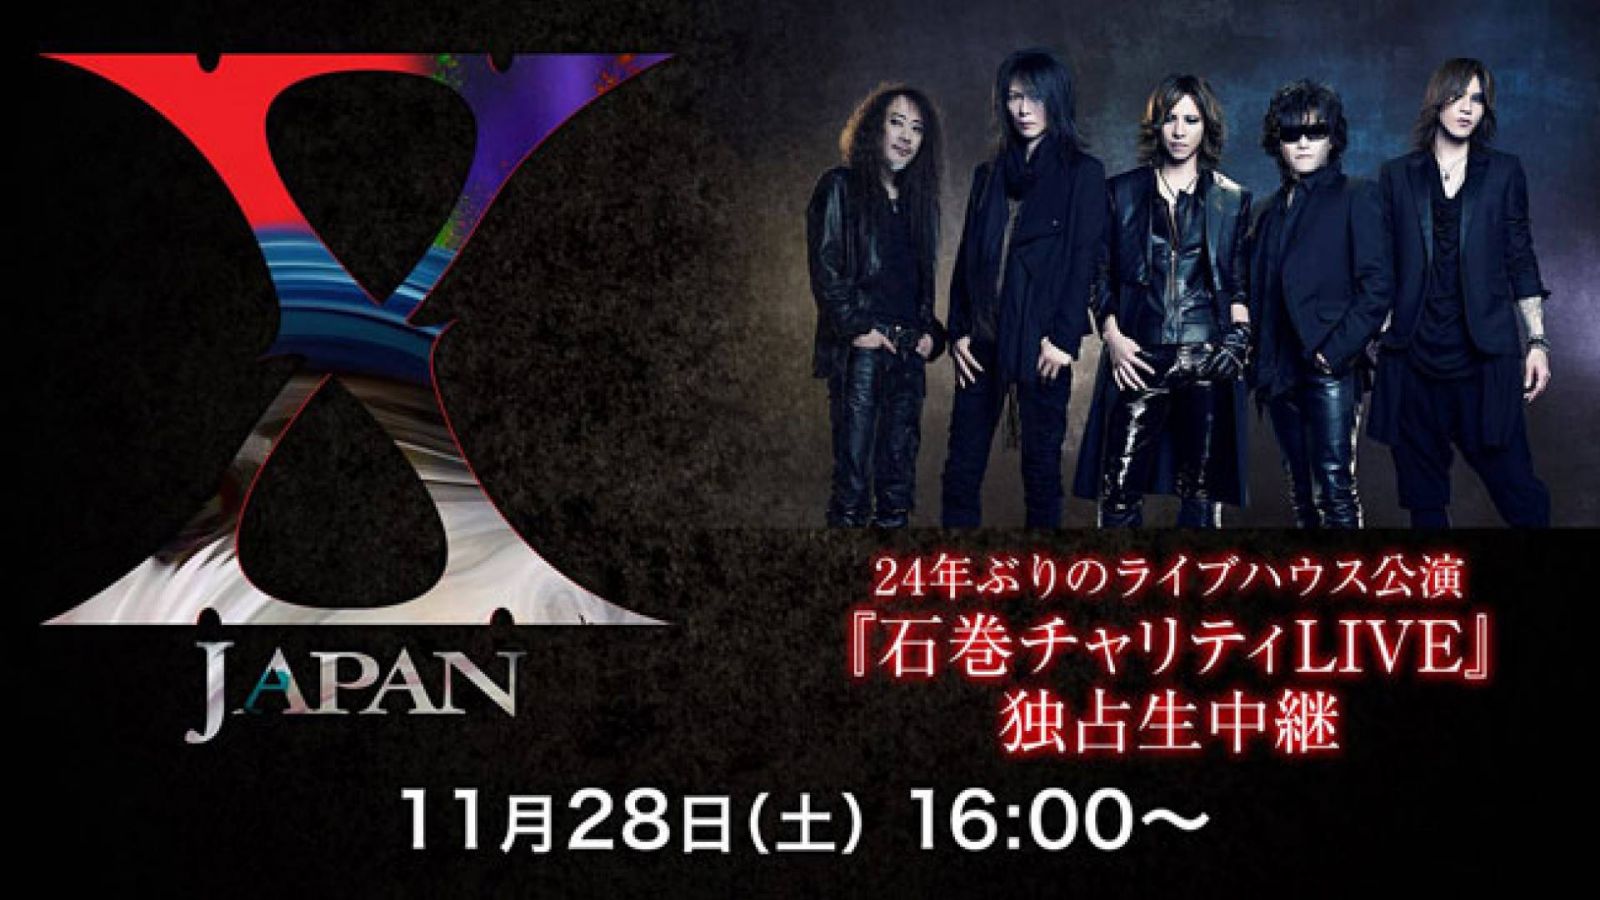 X JAPAN’s Earthquake Relief Concert to be Live-Streamed on Nico Nico Live © X JAPAN